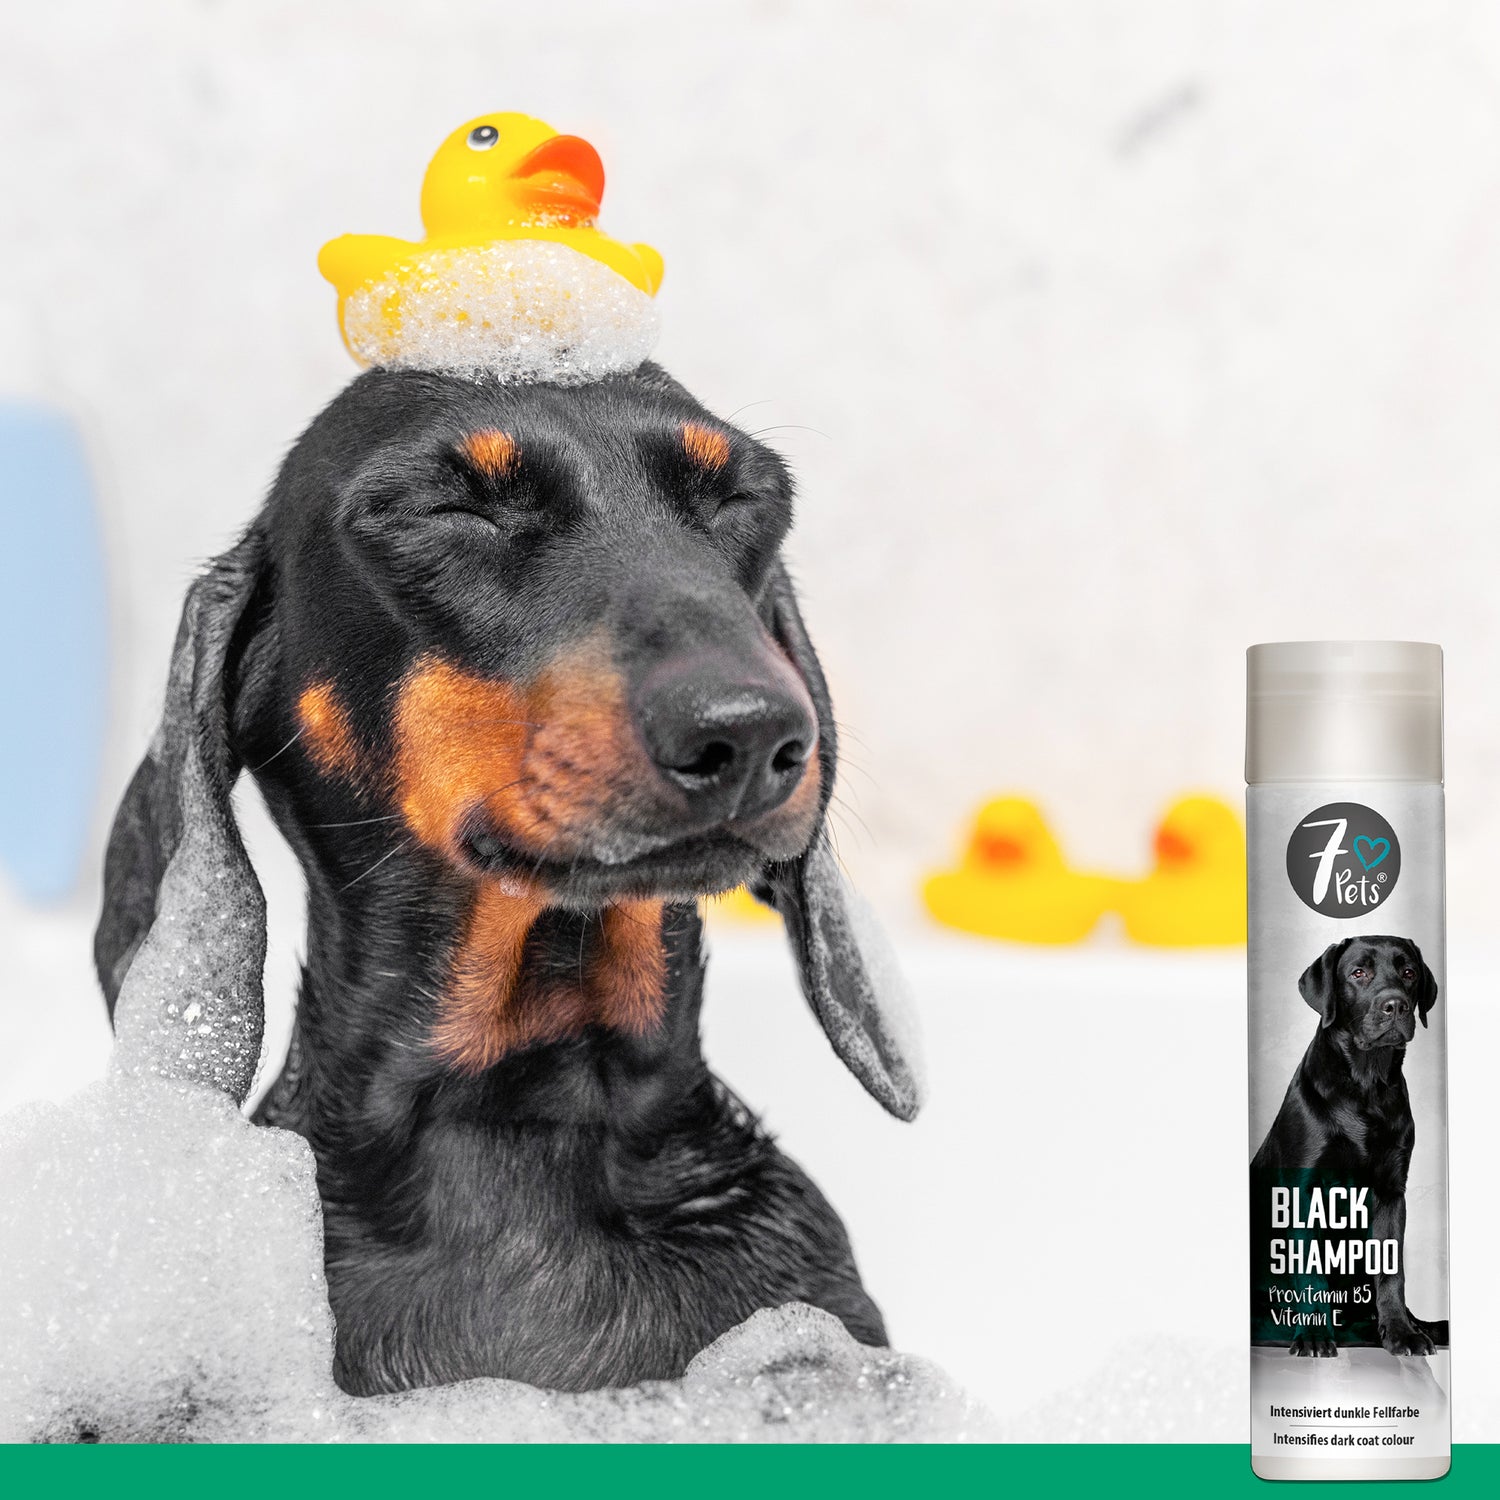 Black Shampoo - Hundeshampoo für dunkelfarbiges Fell